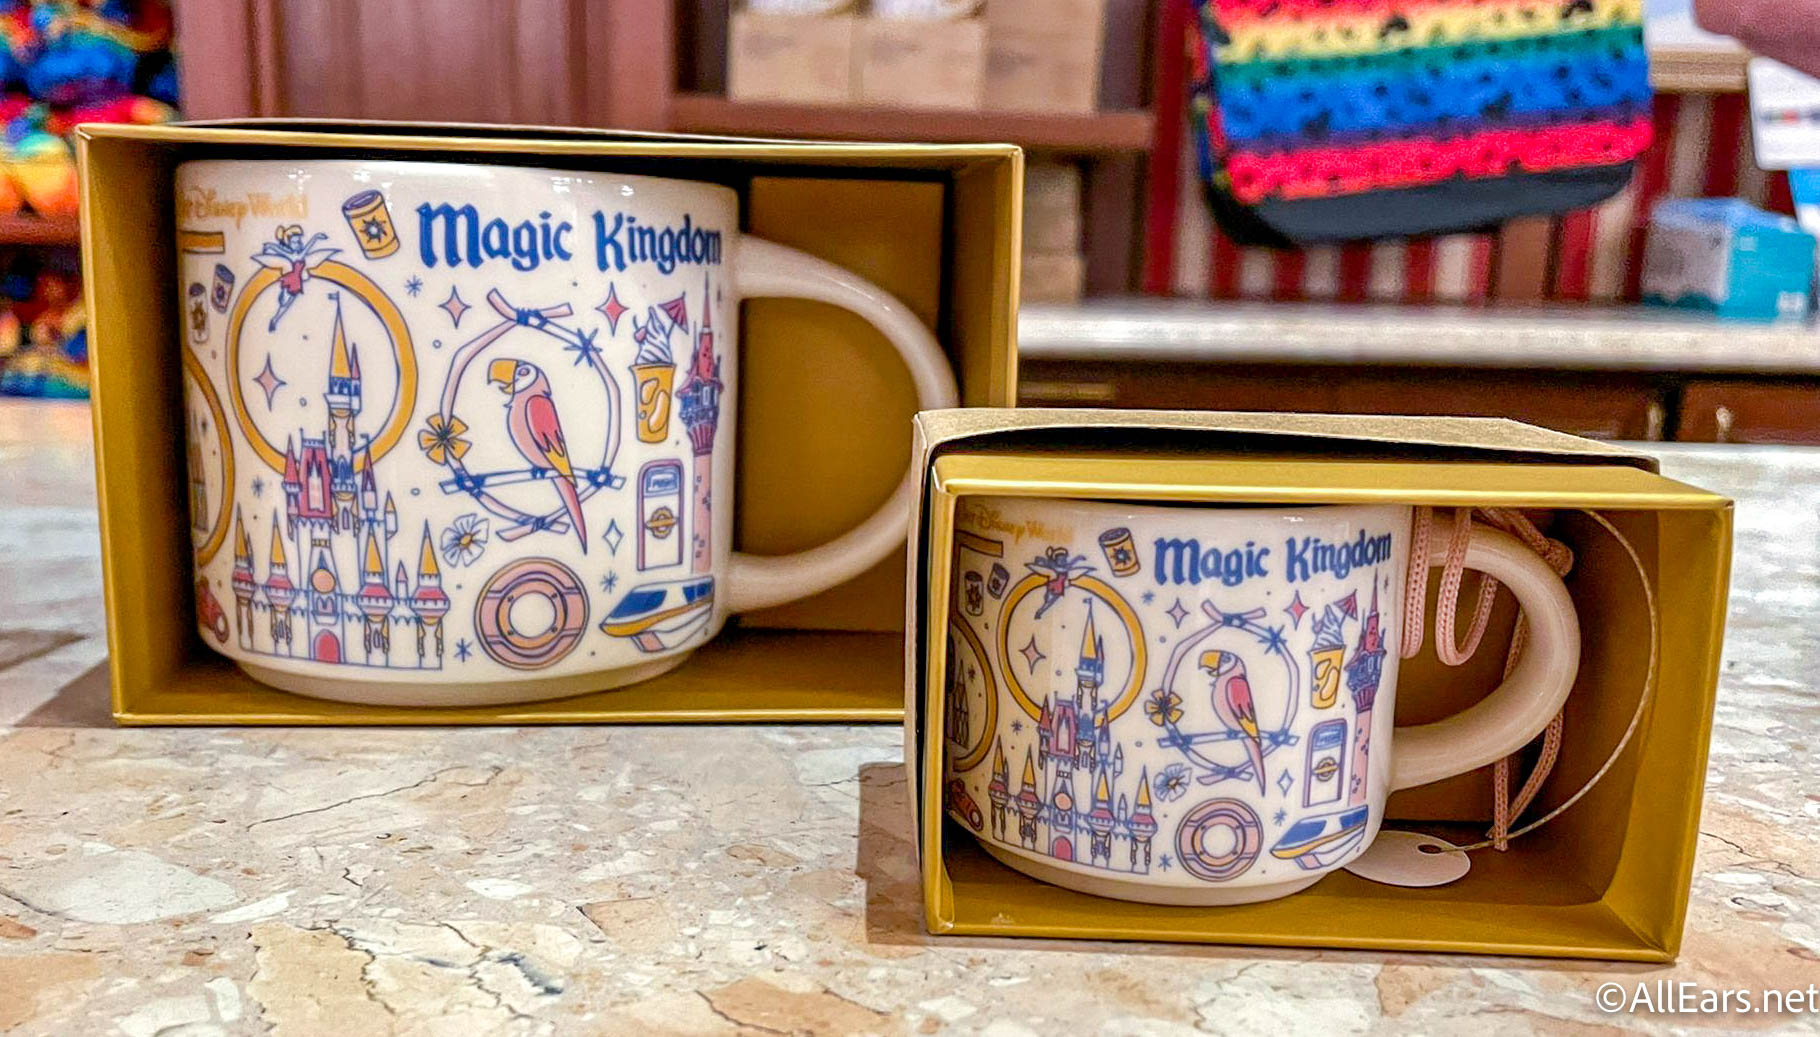 Disney Coffee Mug - The Mountains are Calling - Magic Kingdom